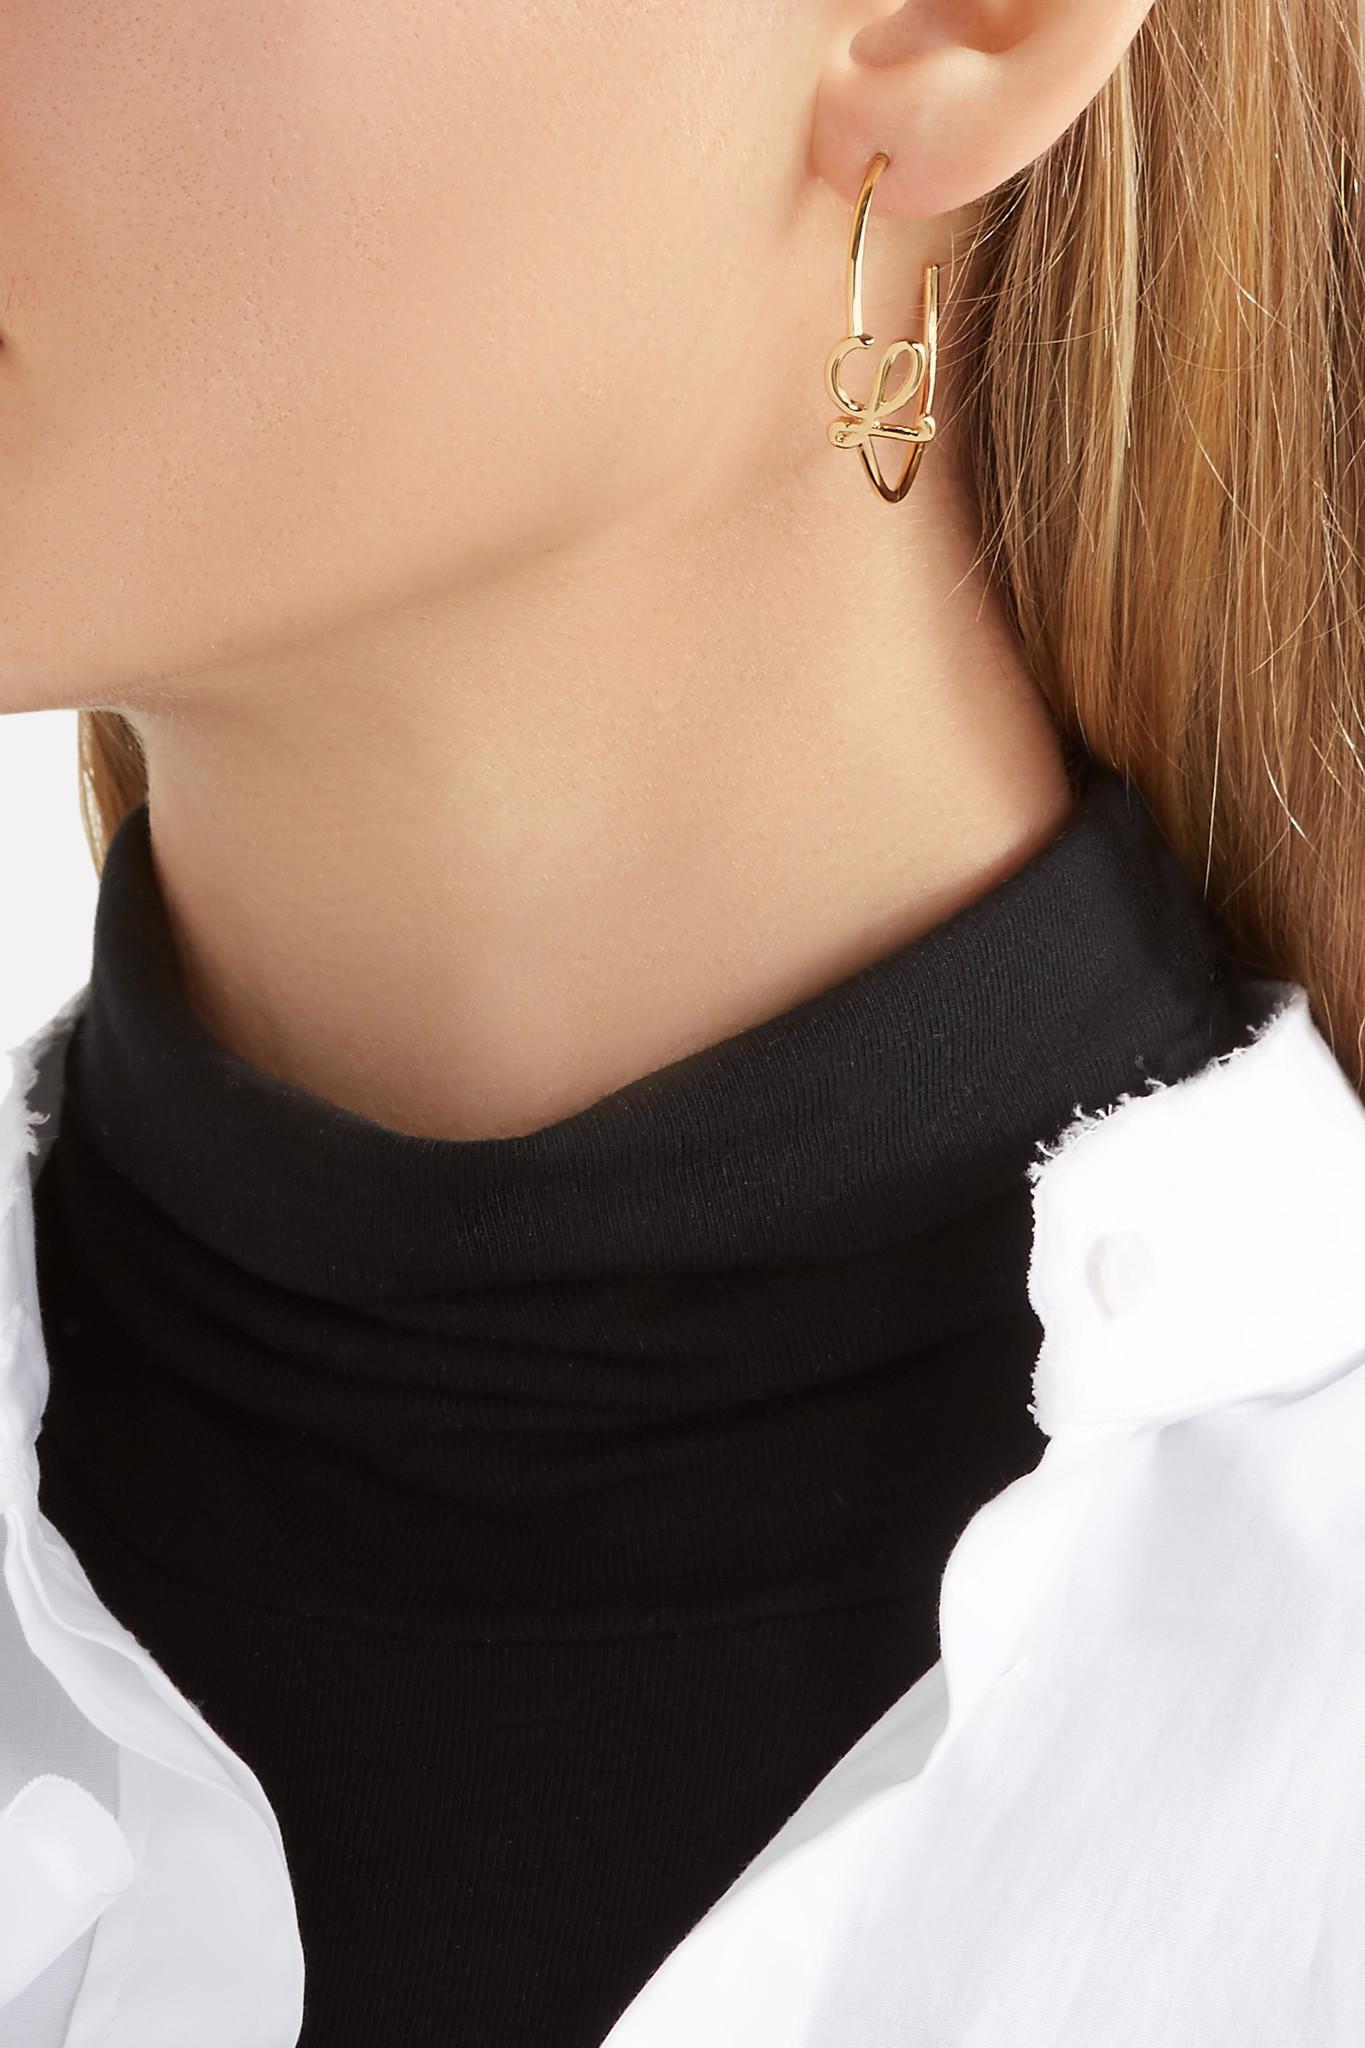 Loewe Women's Gold-Plated Earrings